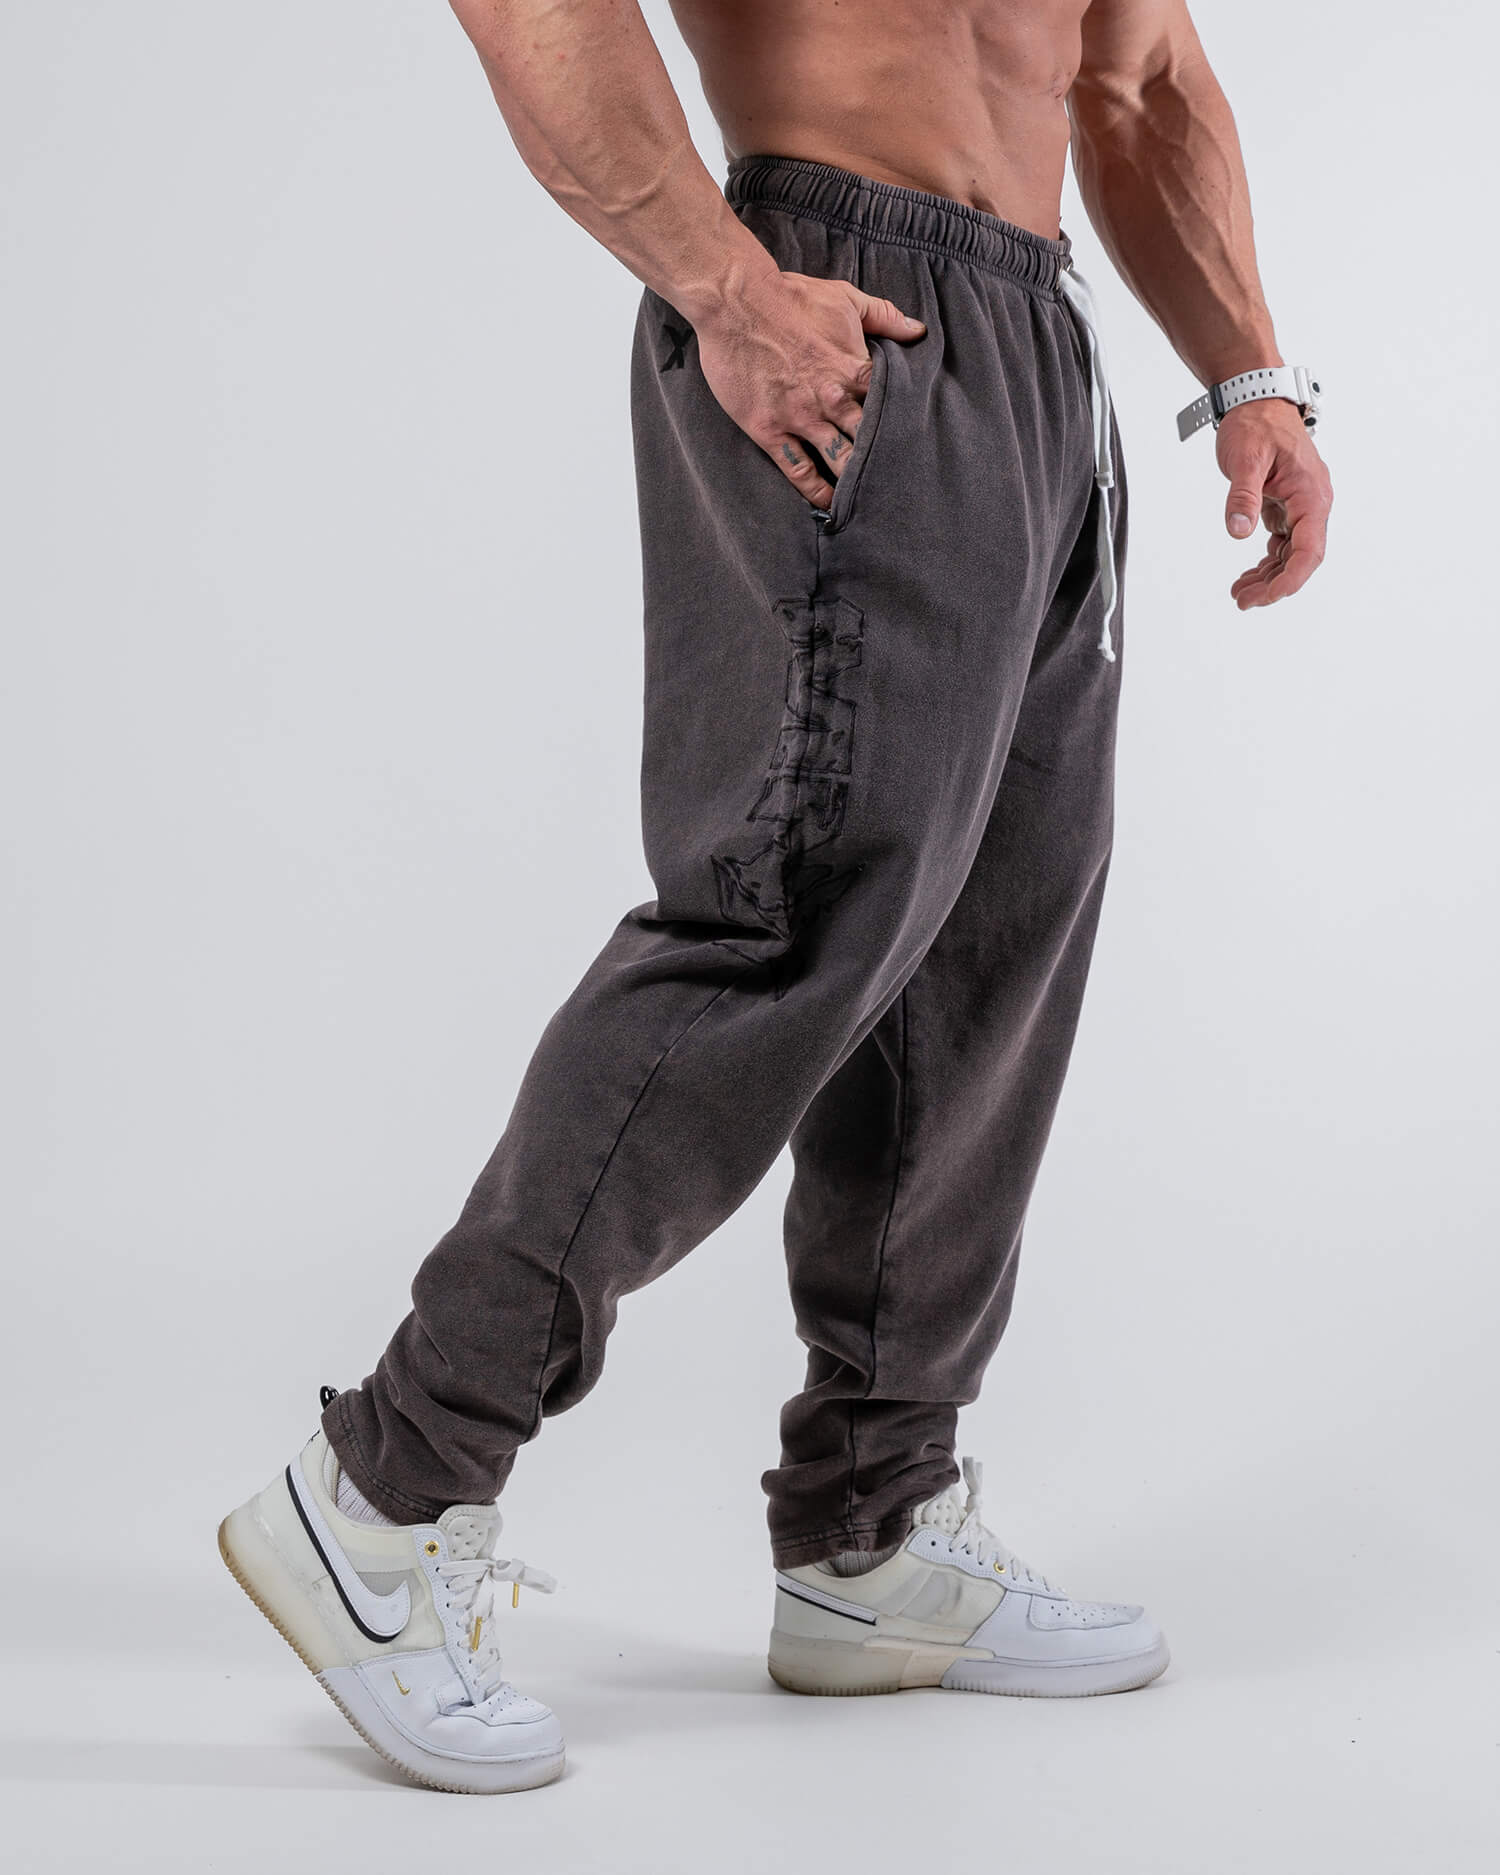 MNX Pantalones Industrial, bronce - MNX Sportswear